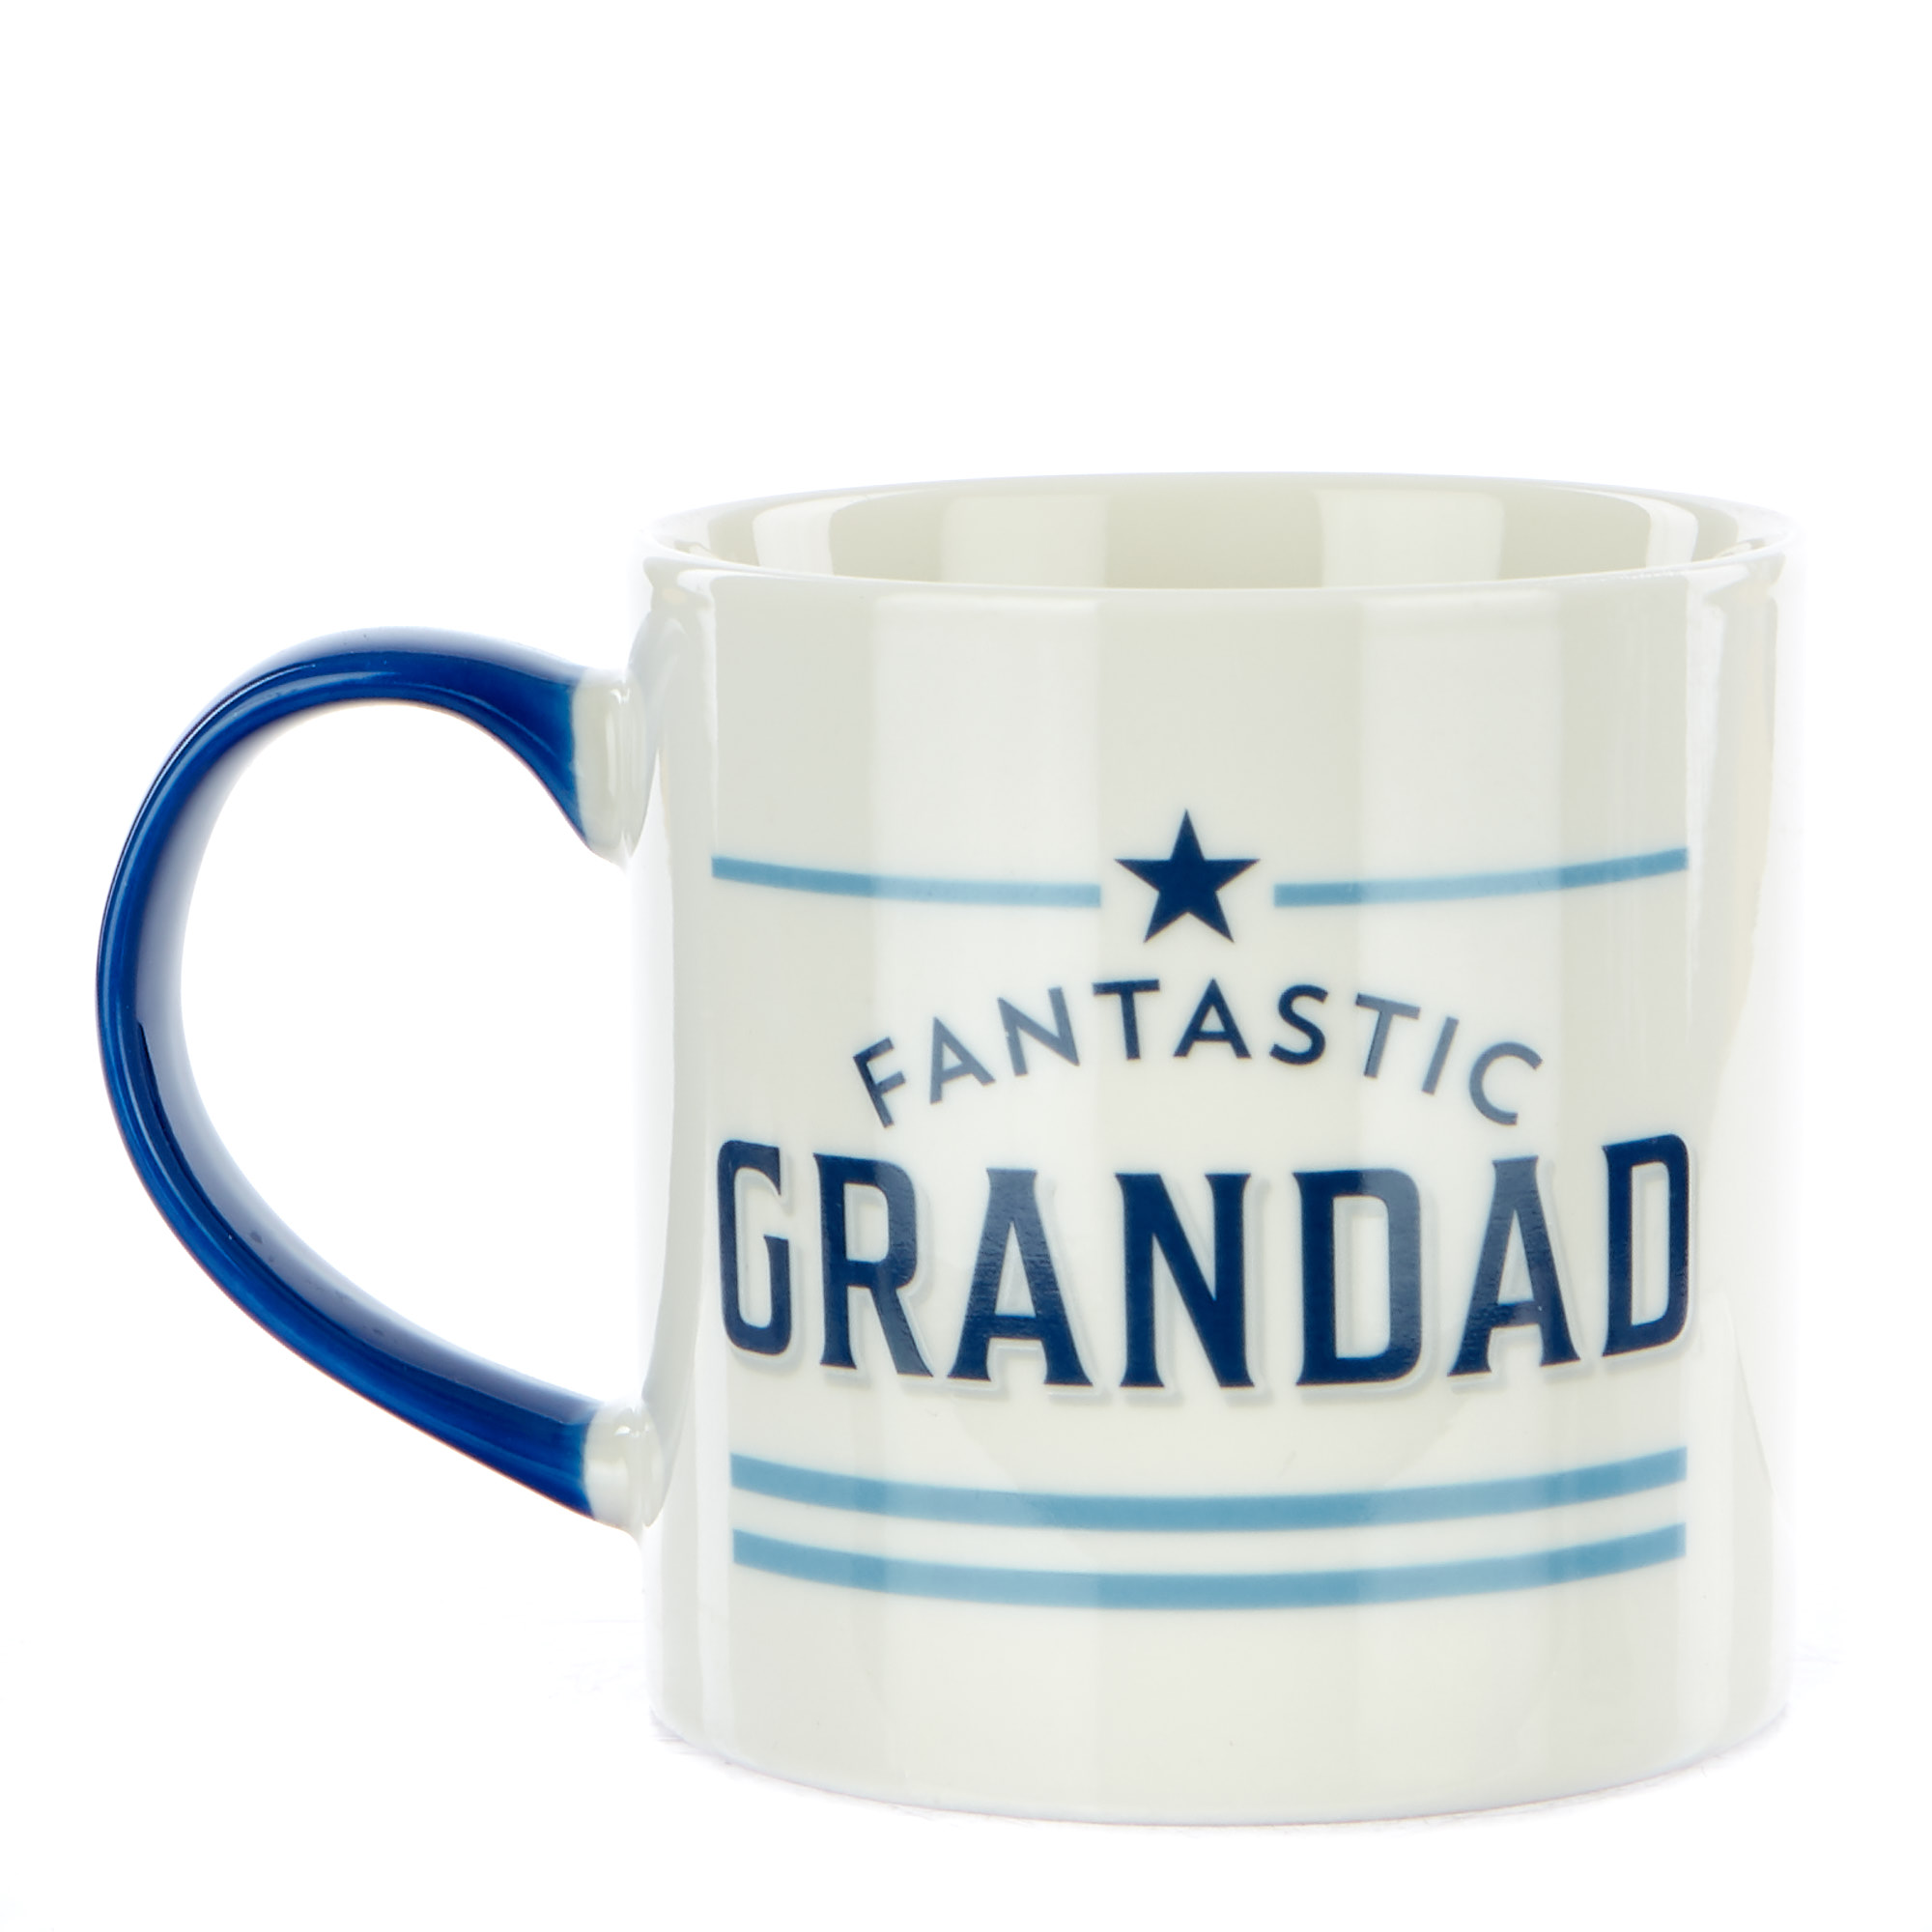 Fantastic Grandad Mug